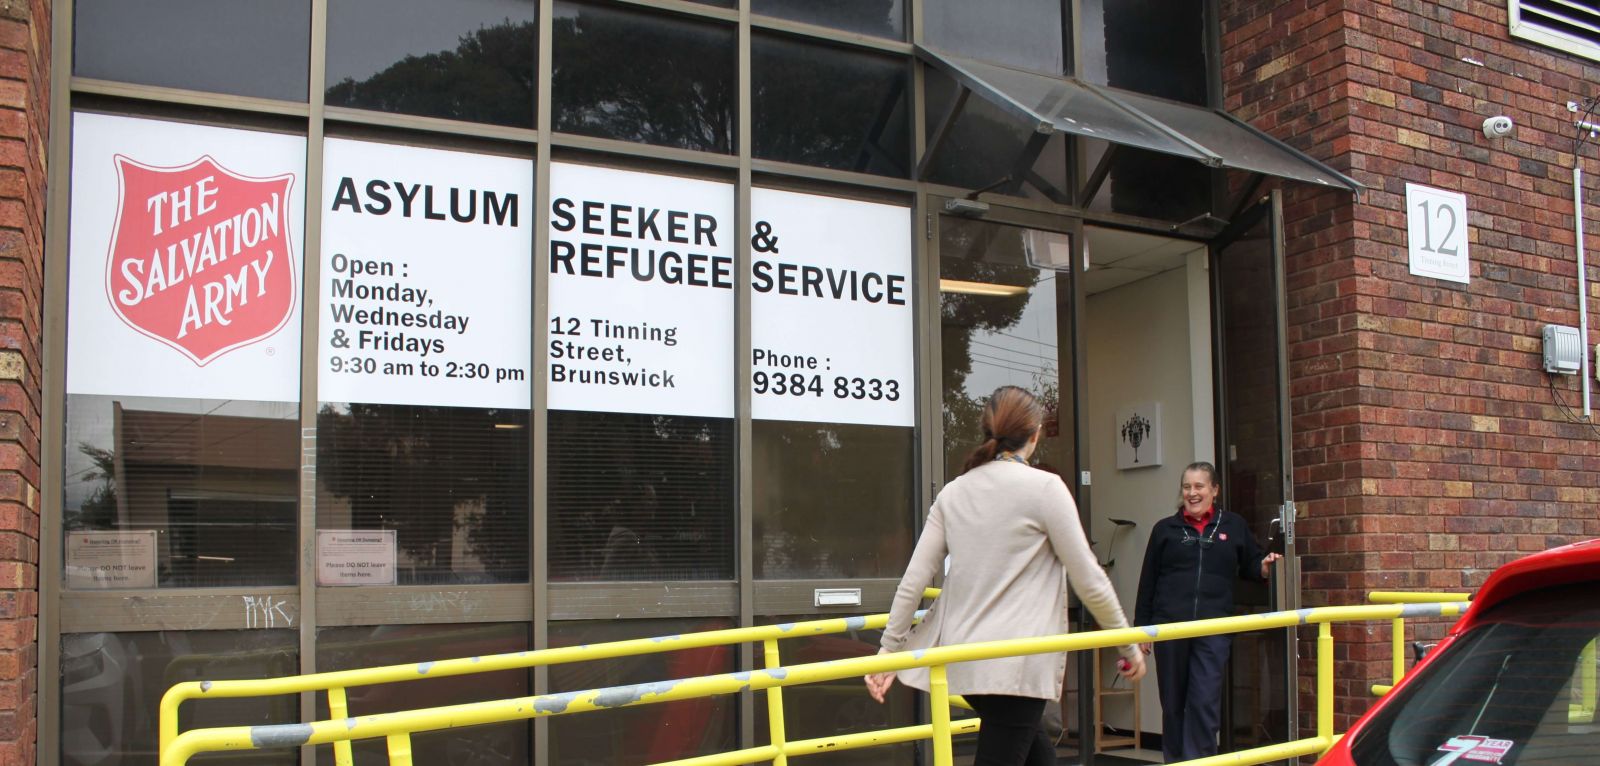 Asylum refugee services building